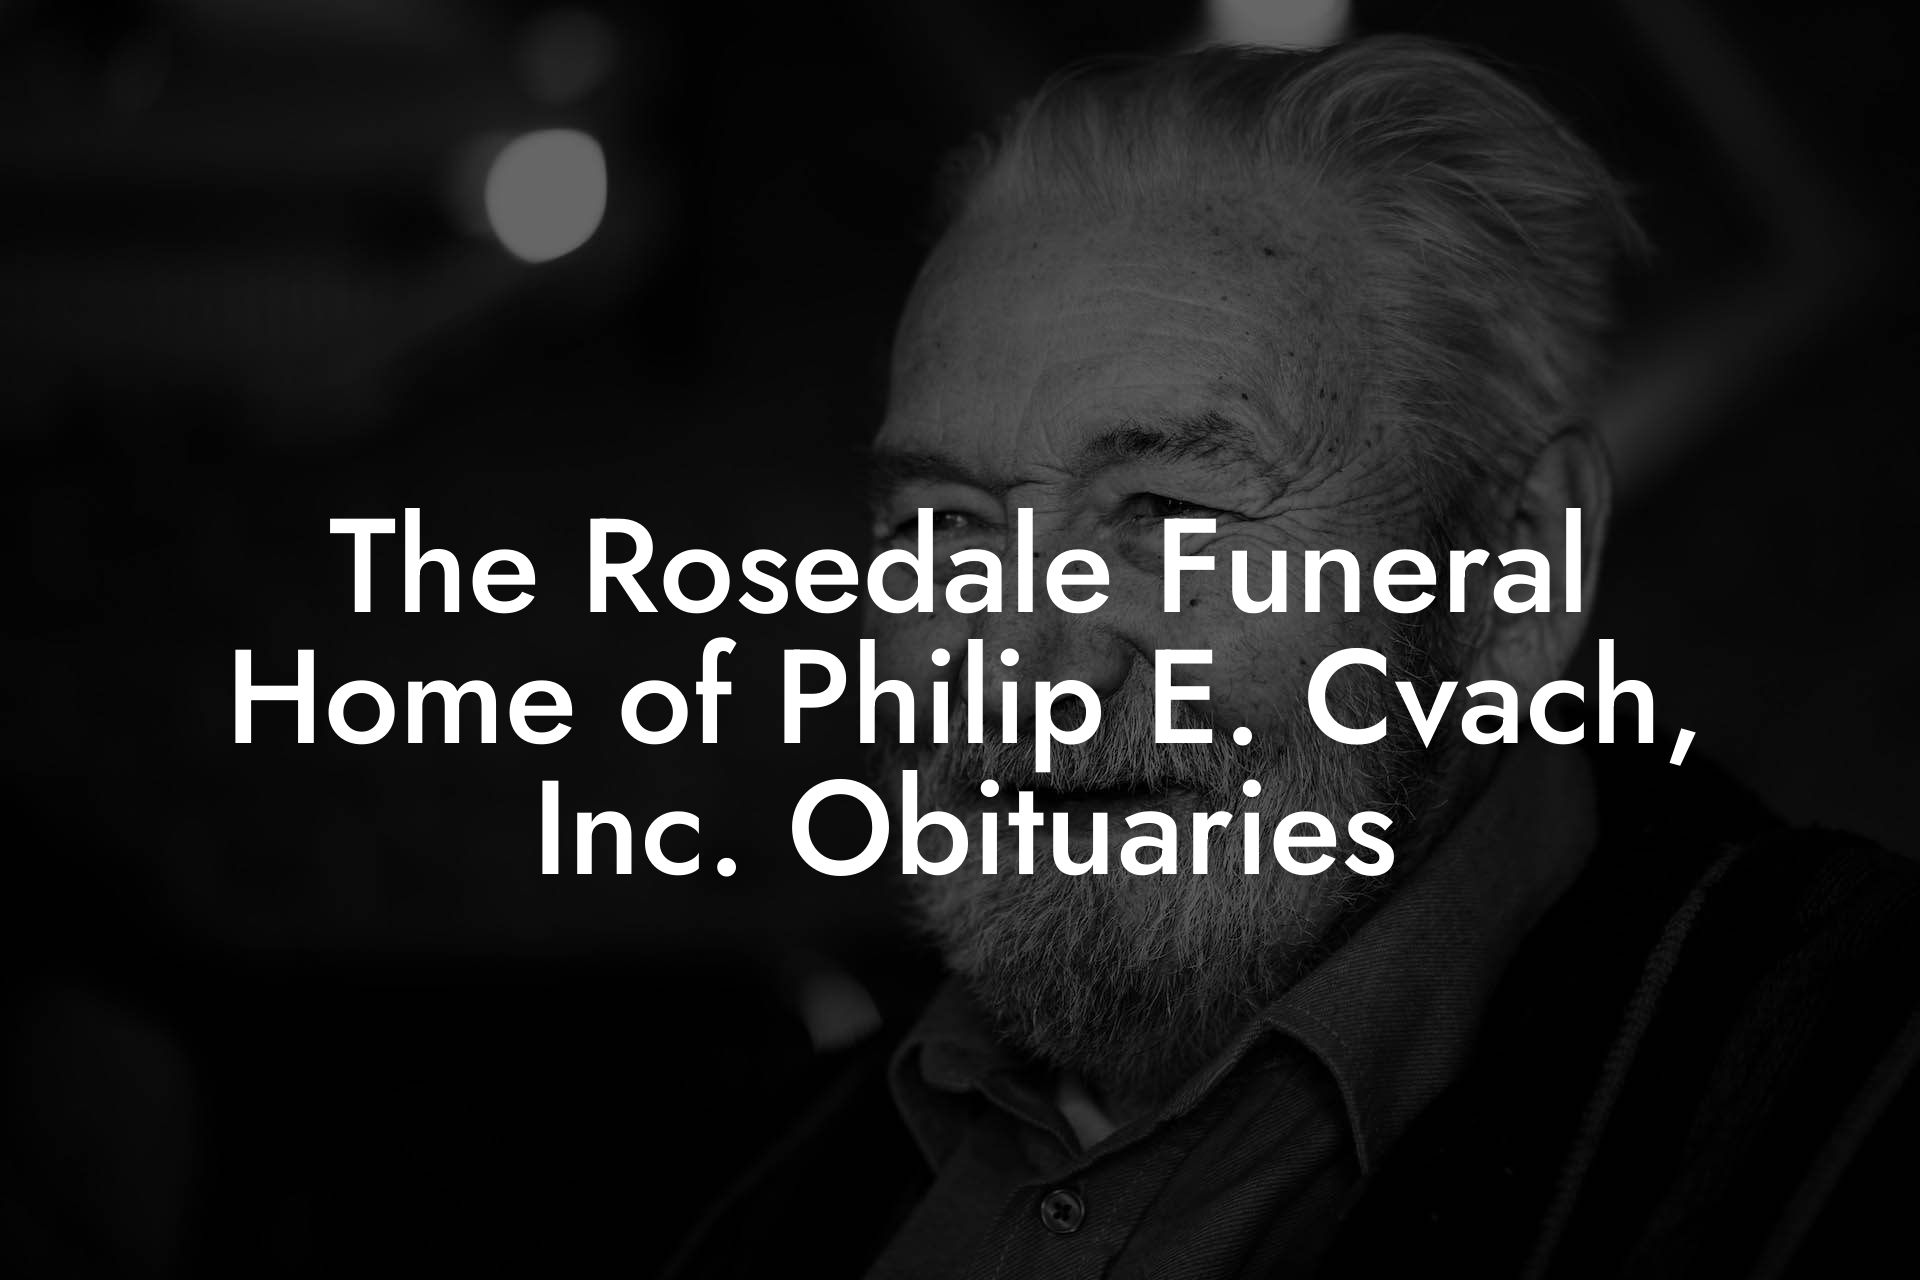 The Rosedale Funeral Home of Philip E. Cvach, Inc. Obituaries